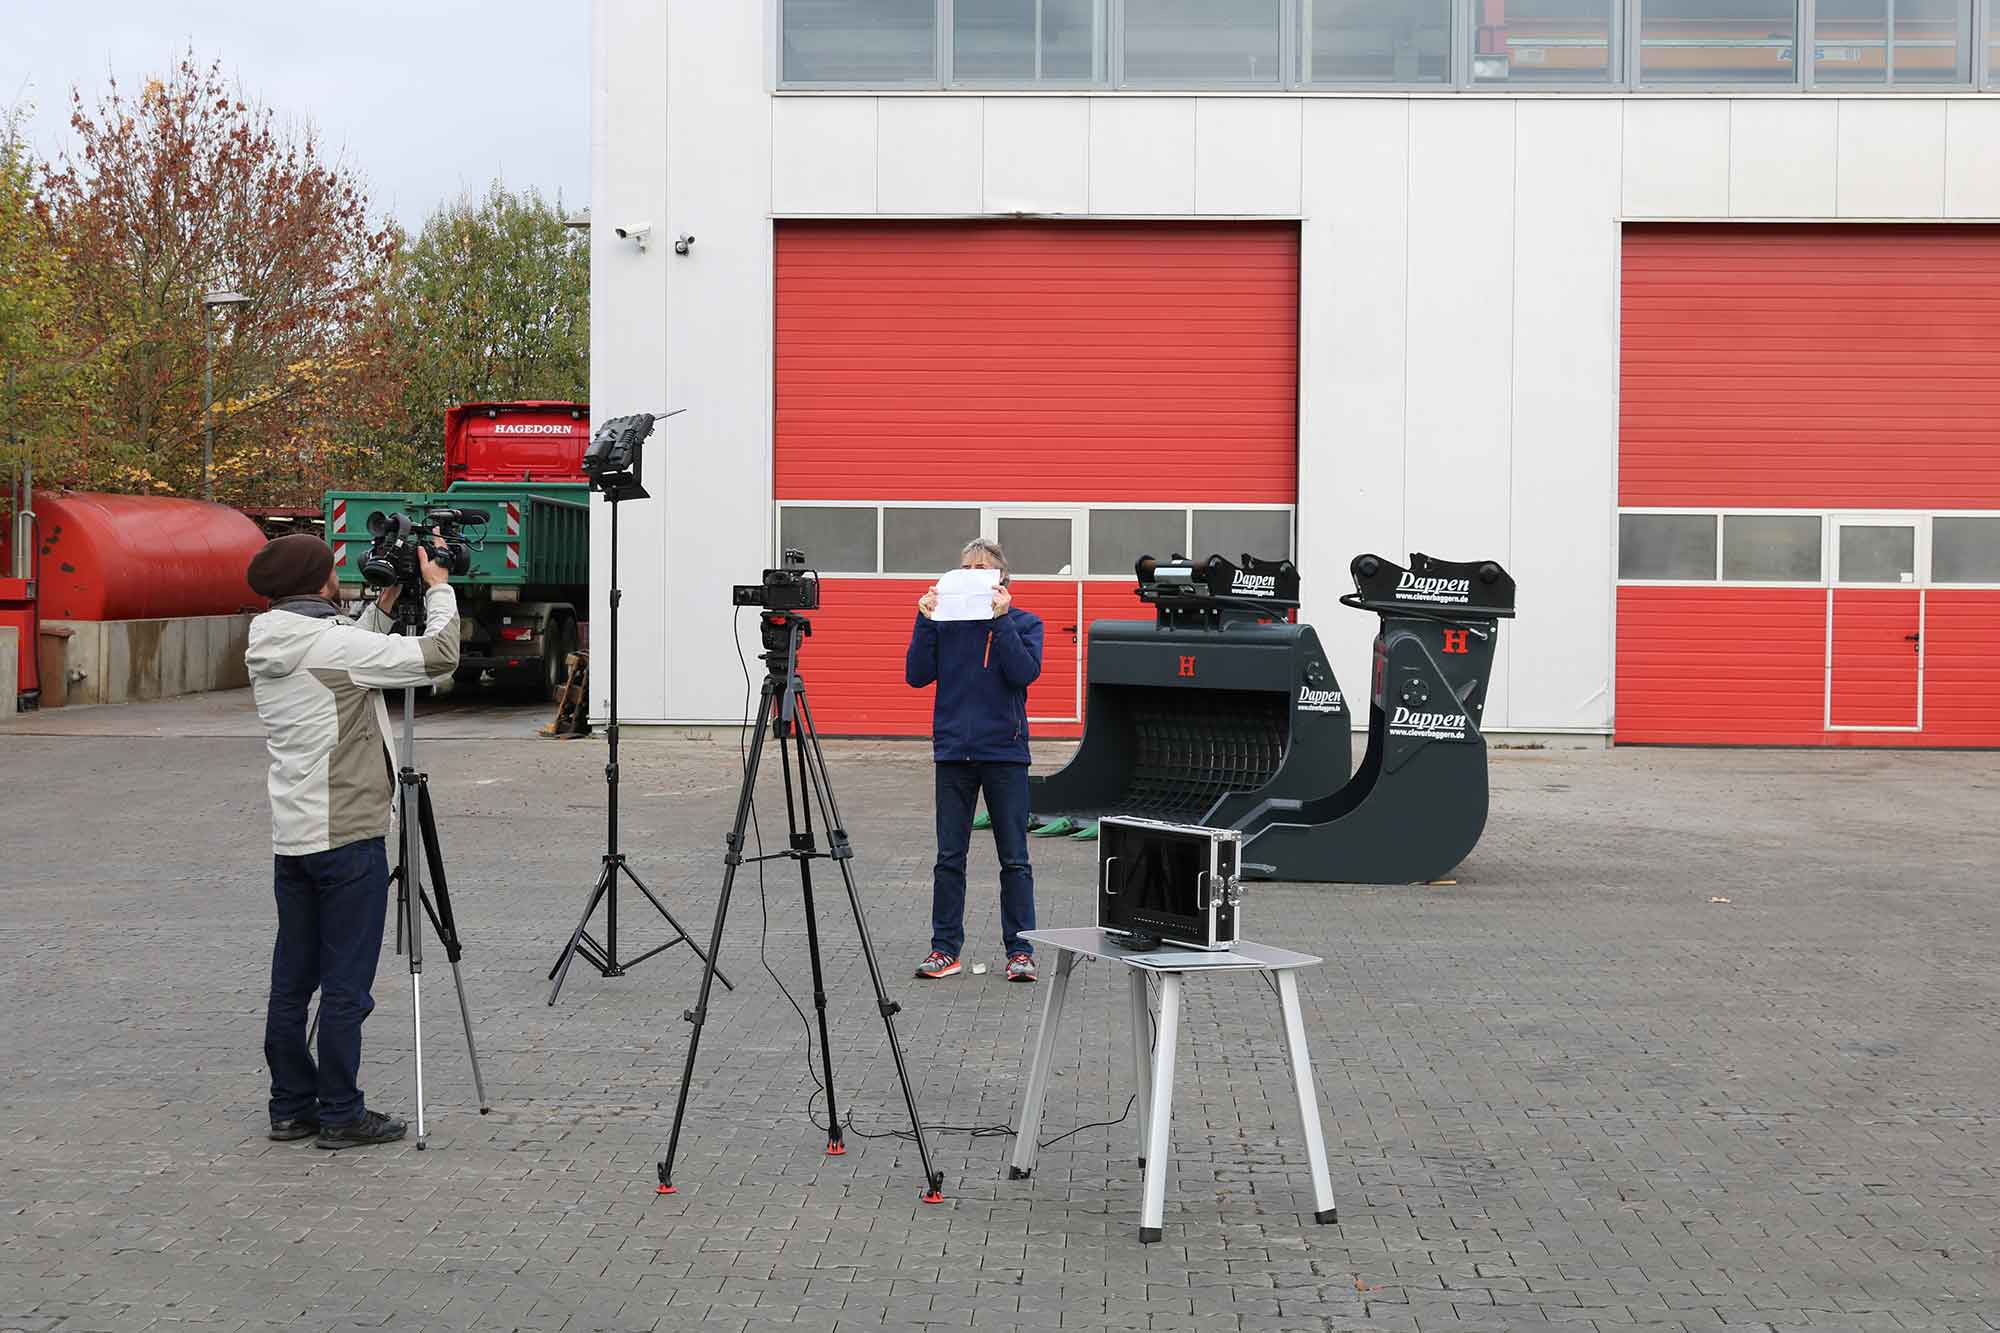 Dappen Werkzeug- und Maschinenbau | Video shoot | Set for video shoot with screening buckets and adapter plates